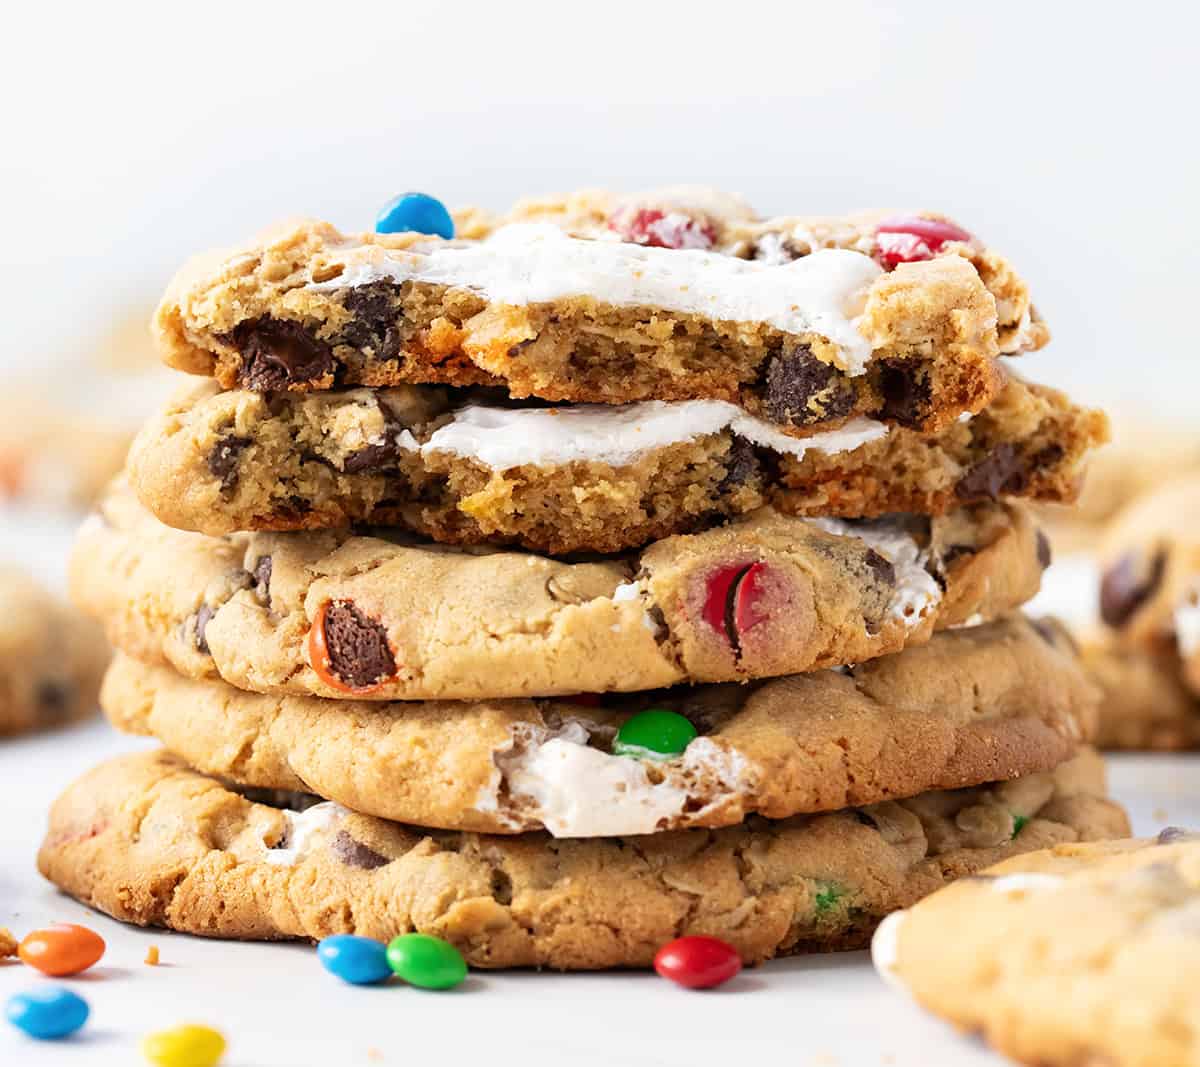 Stack of Marshmallow Monster Cookies with top cookie broken in half showing inside texture.